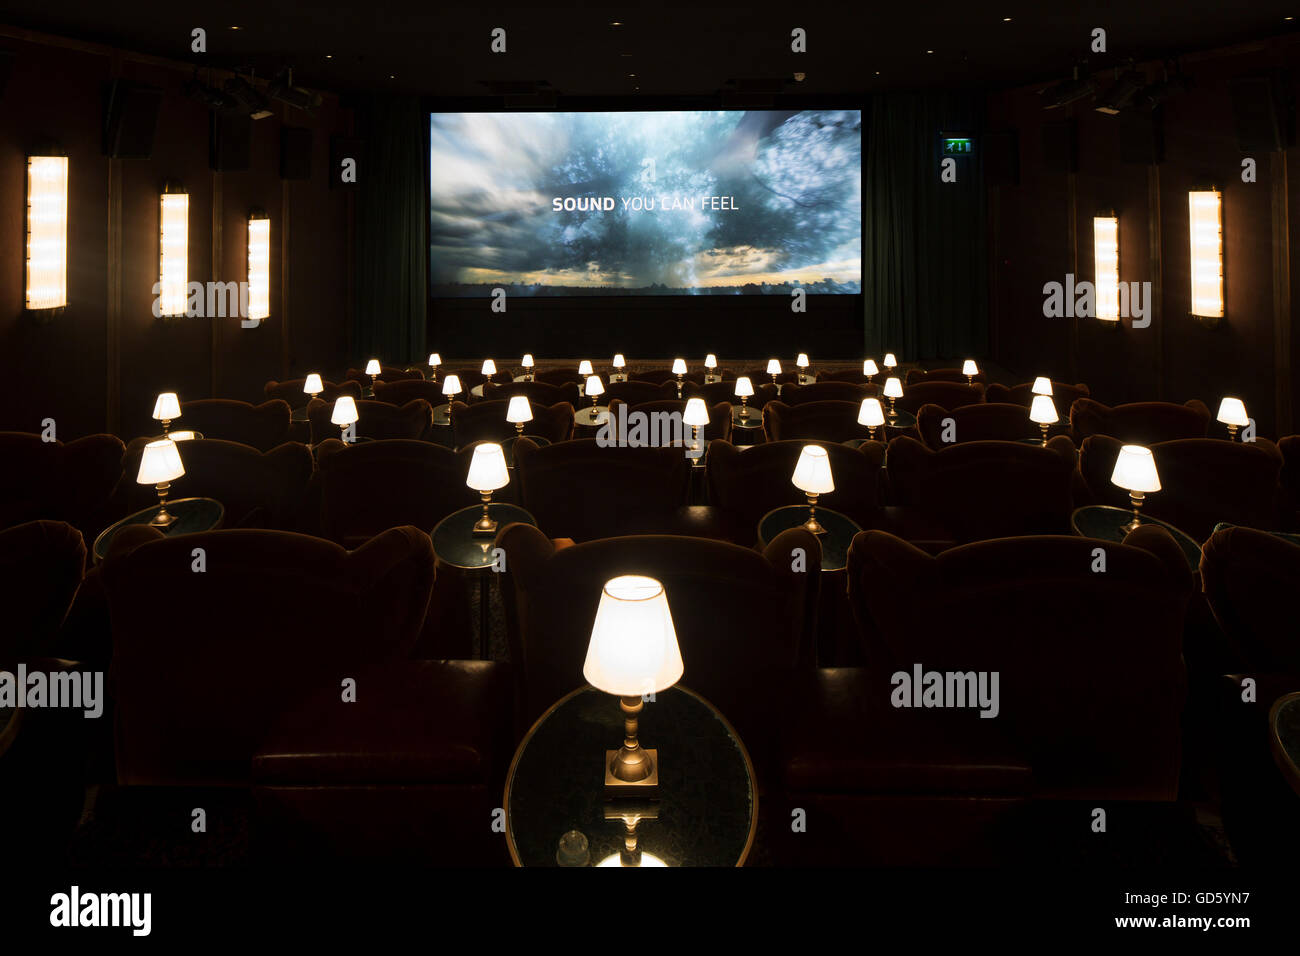 Interior view of cinema. 76 Dean Street, London, United Kingdom. Architect: SODA., 2016. Stock Photo